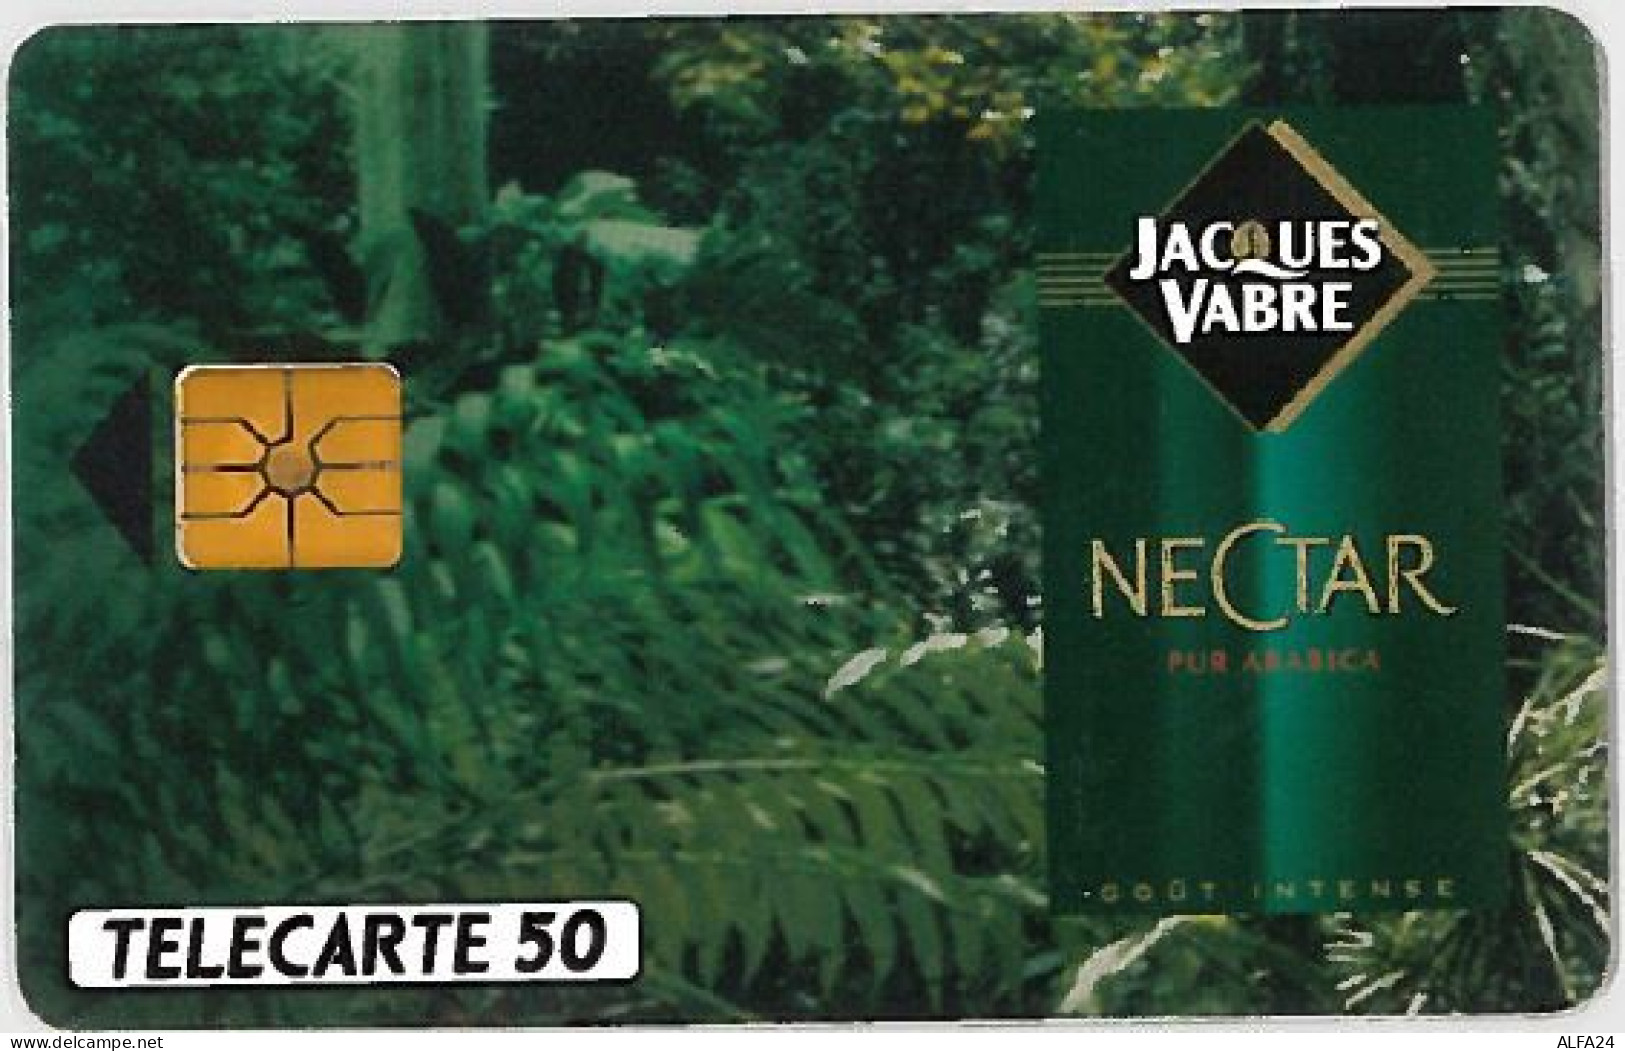 TELECARTE F348 J.BVABRE NECTAR - 1993